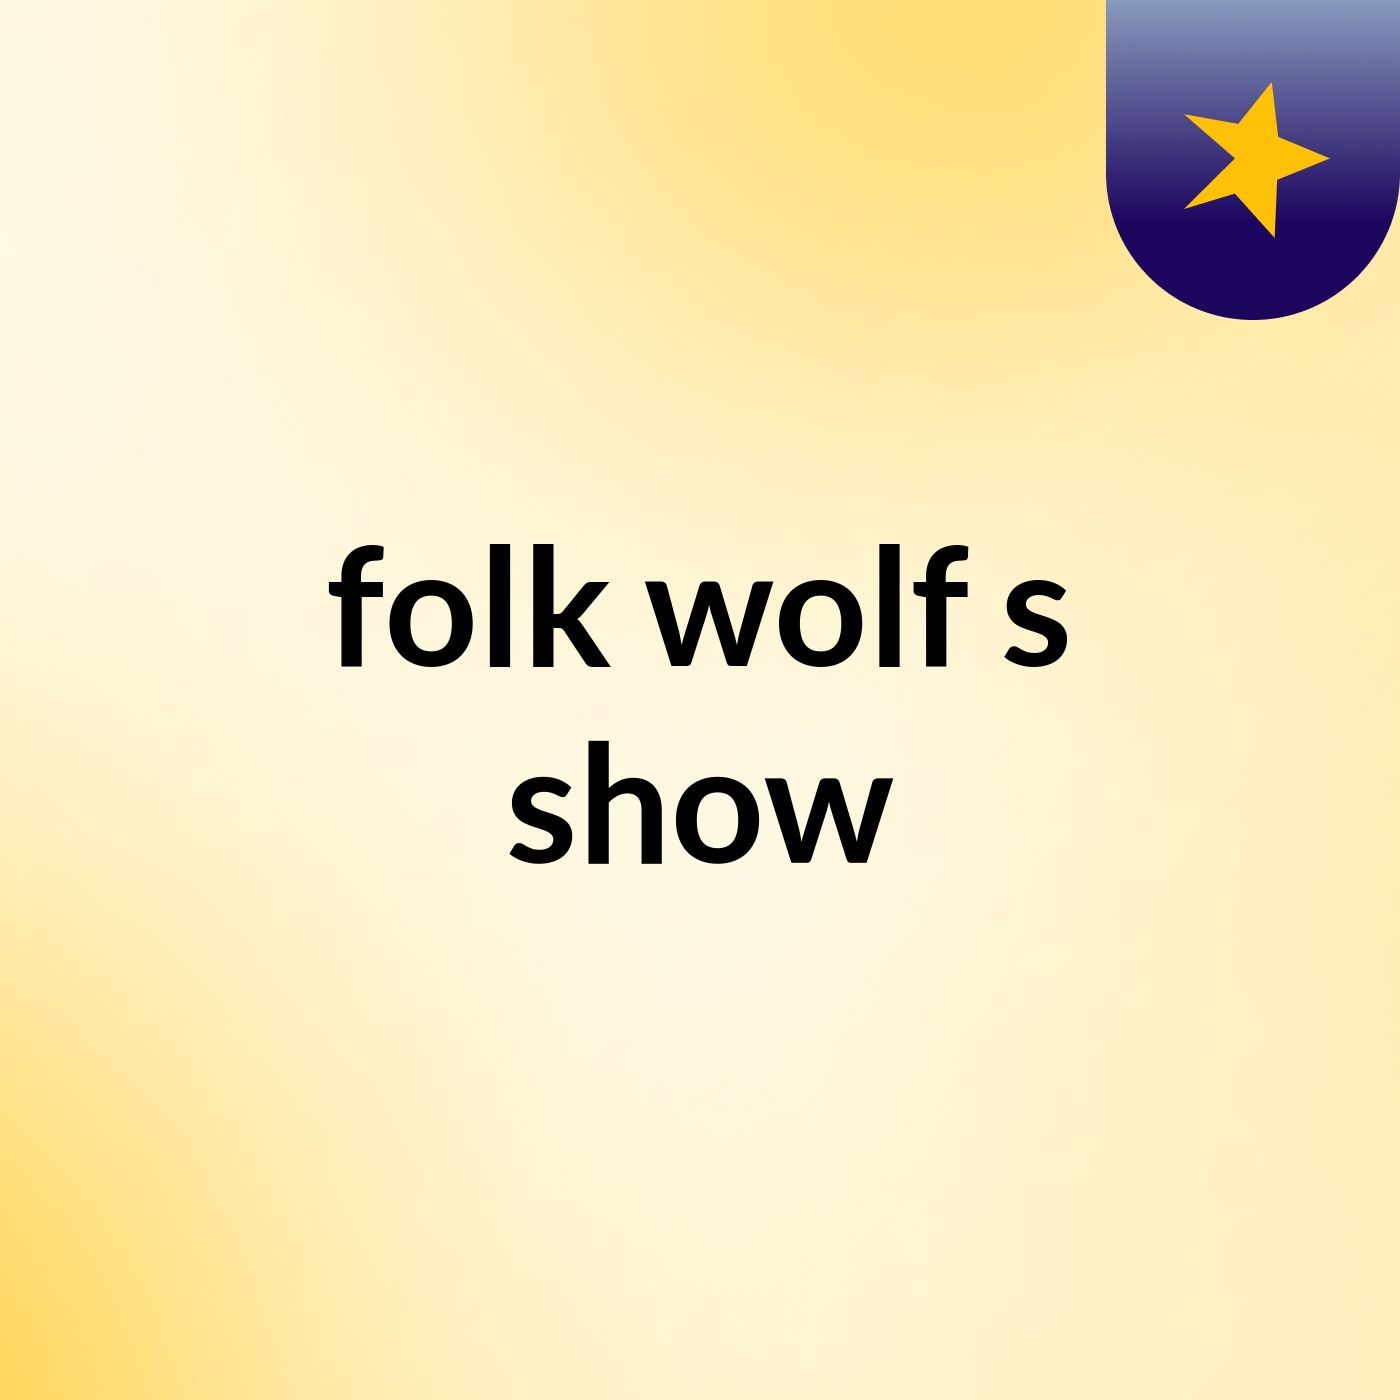 folk wolf's show